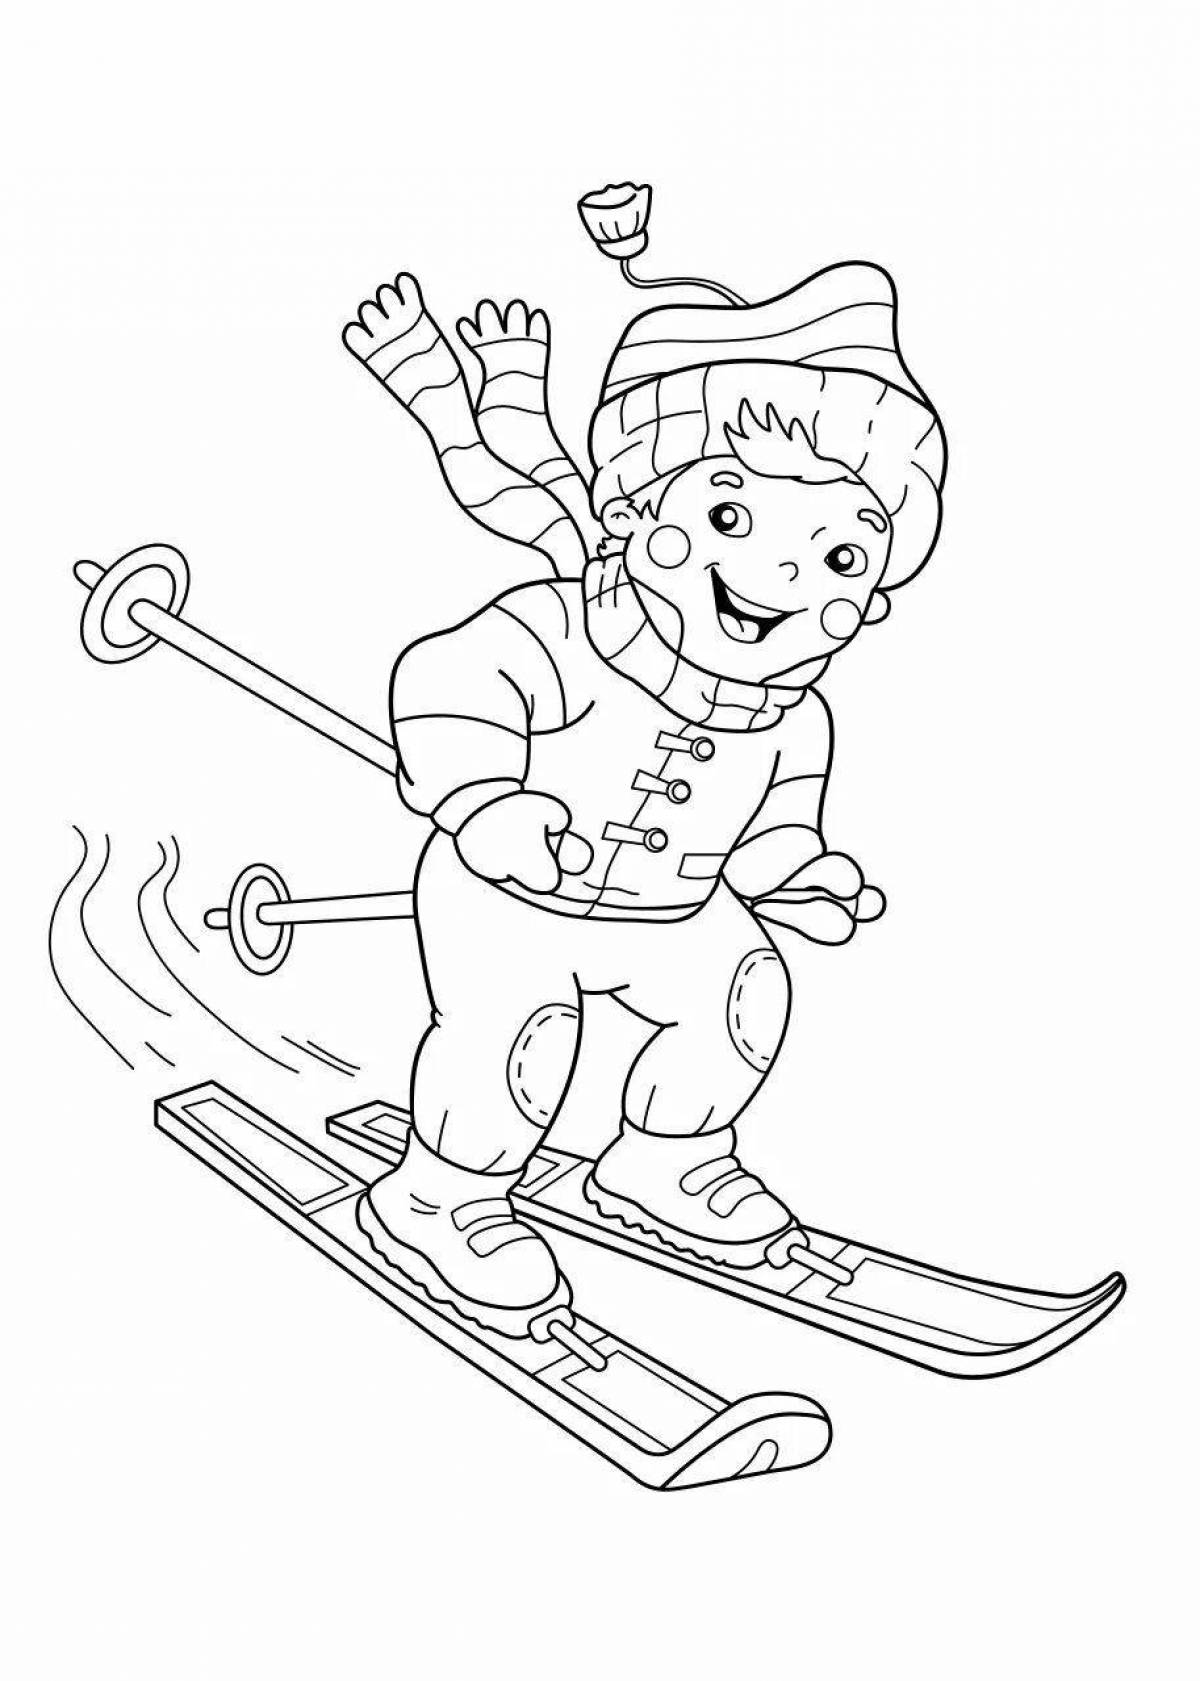 Веселая раскраска для катания на лыжах